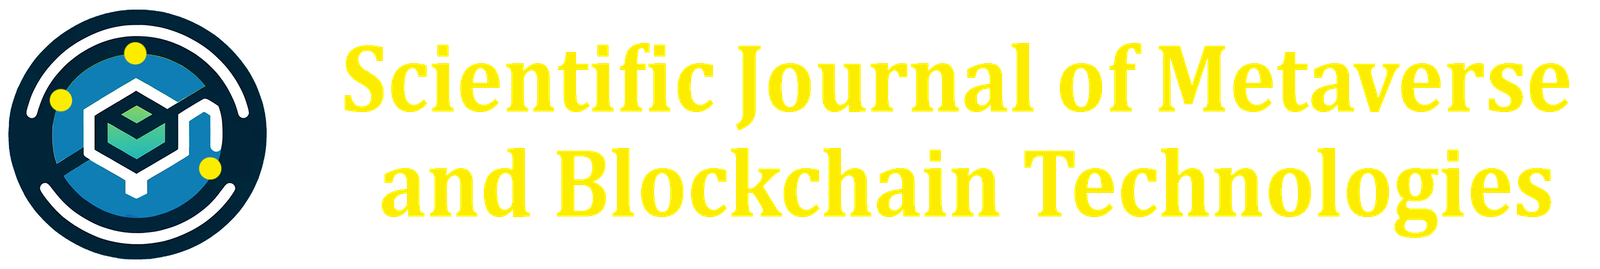 Scientific Journal of Metaverse and Blockchain Technologies